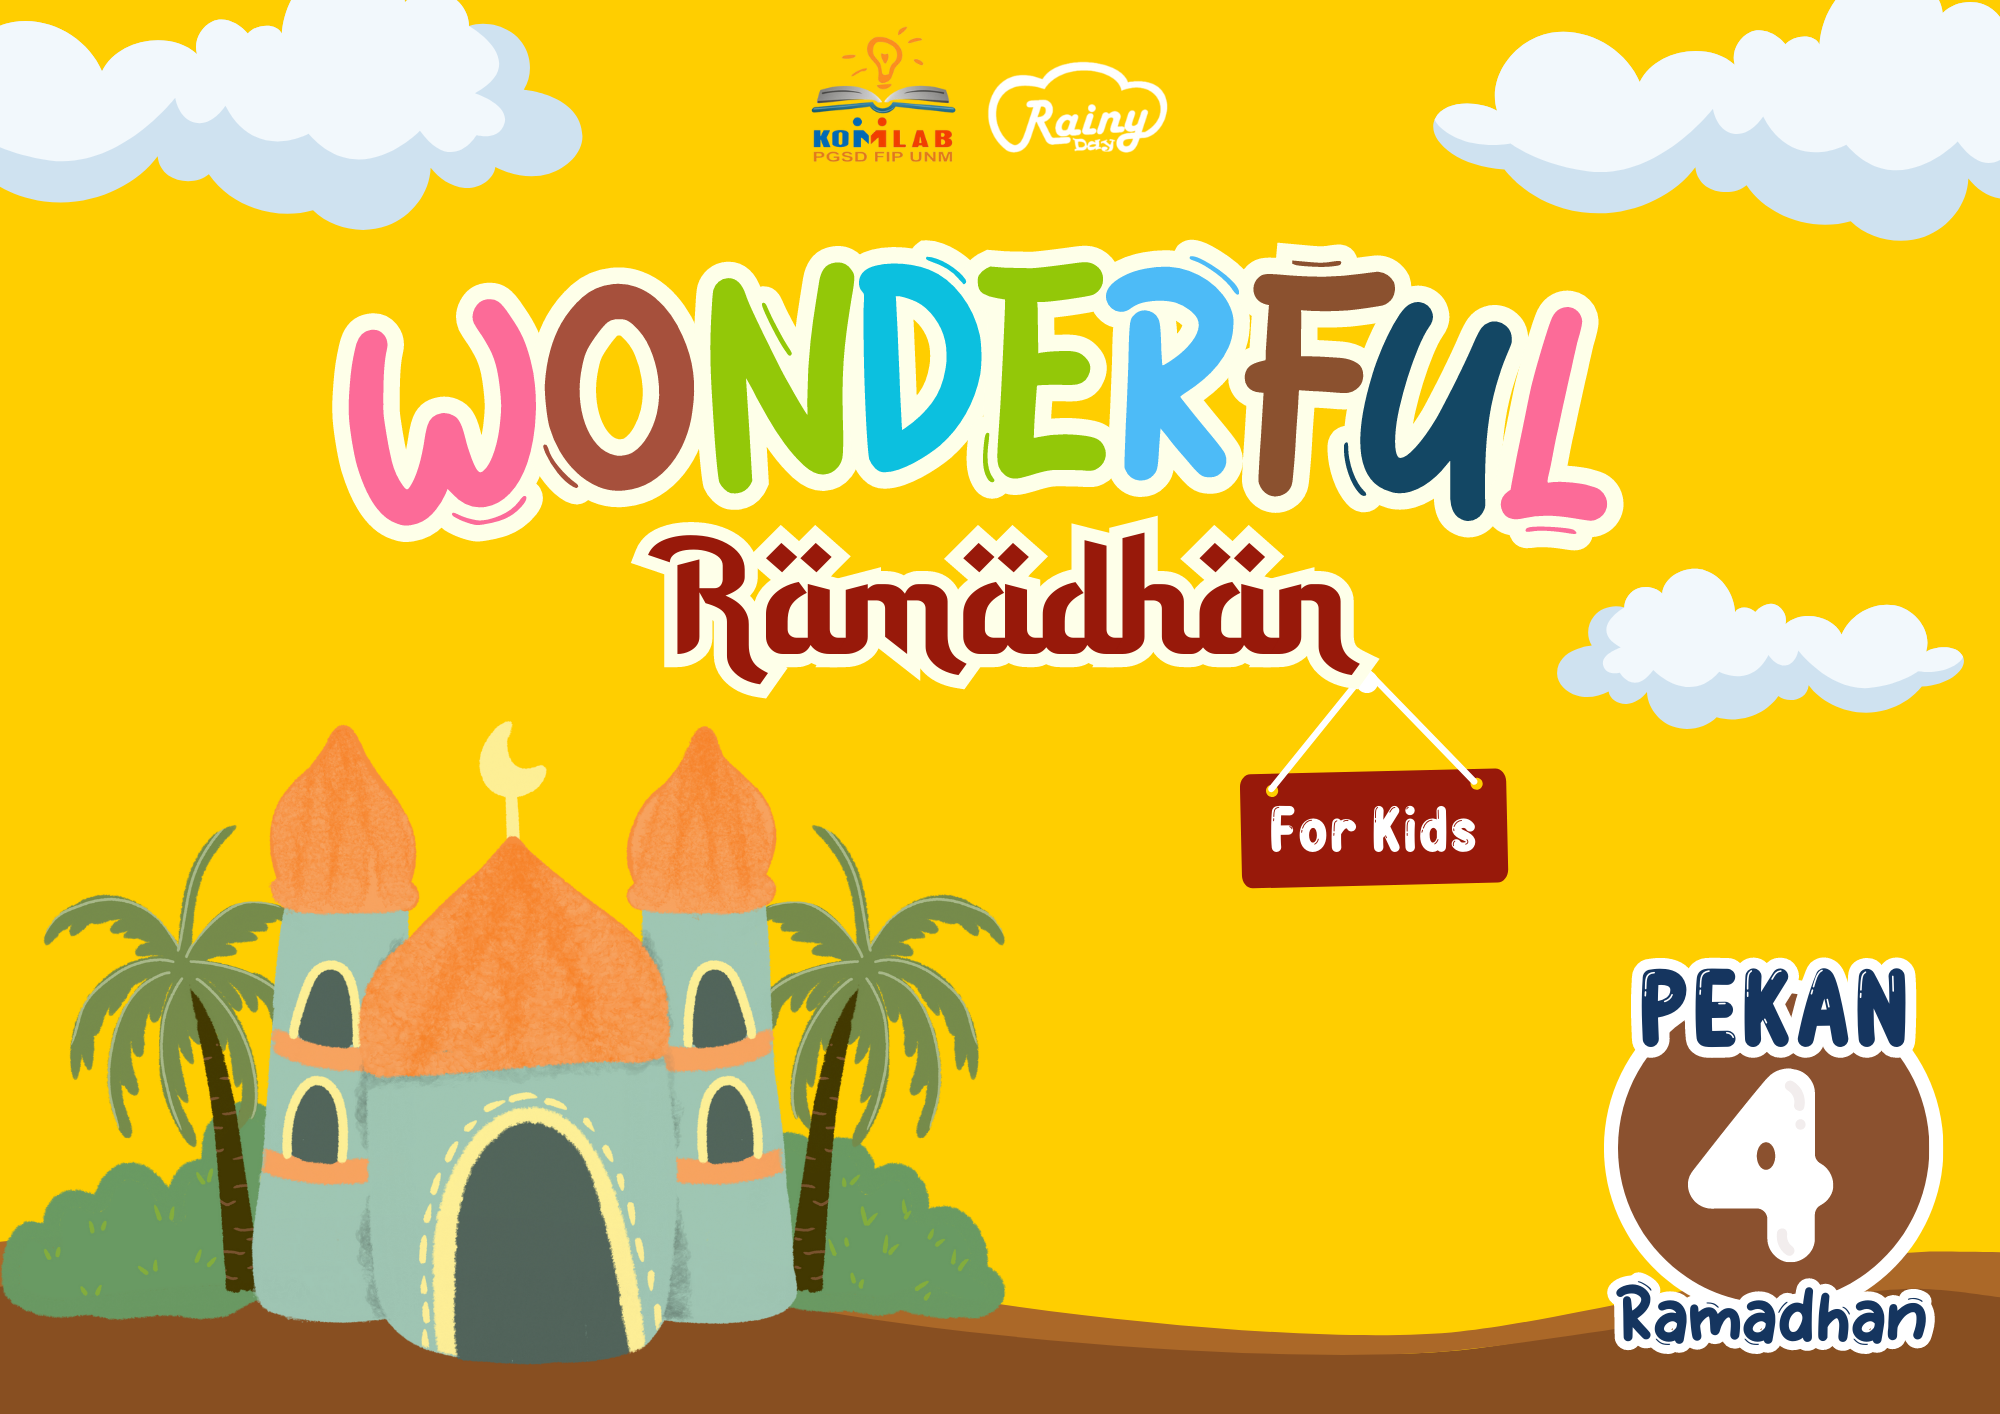 Wonderful Ramadhan 2